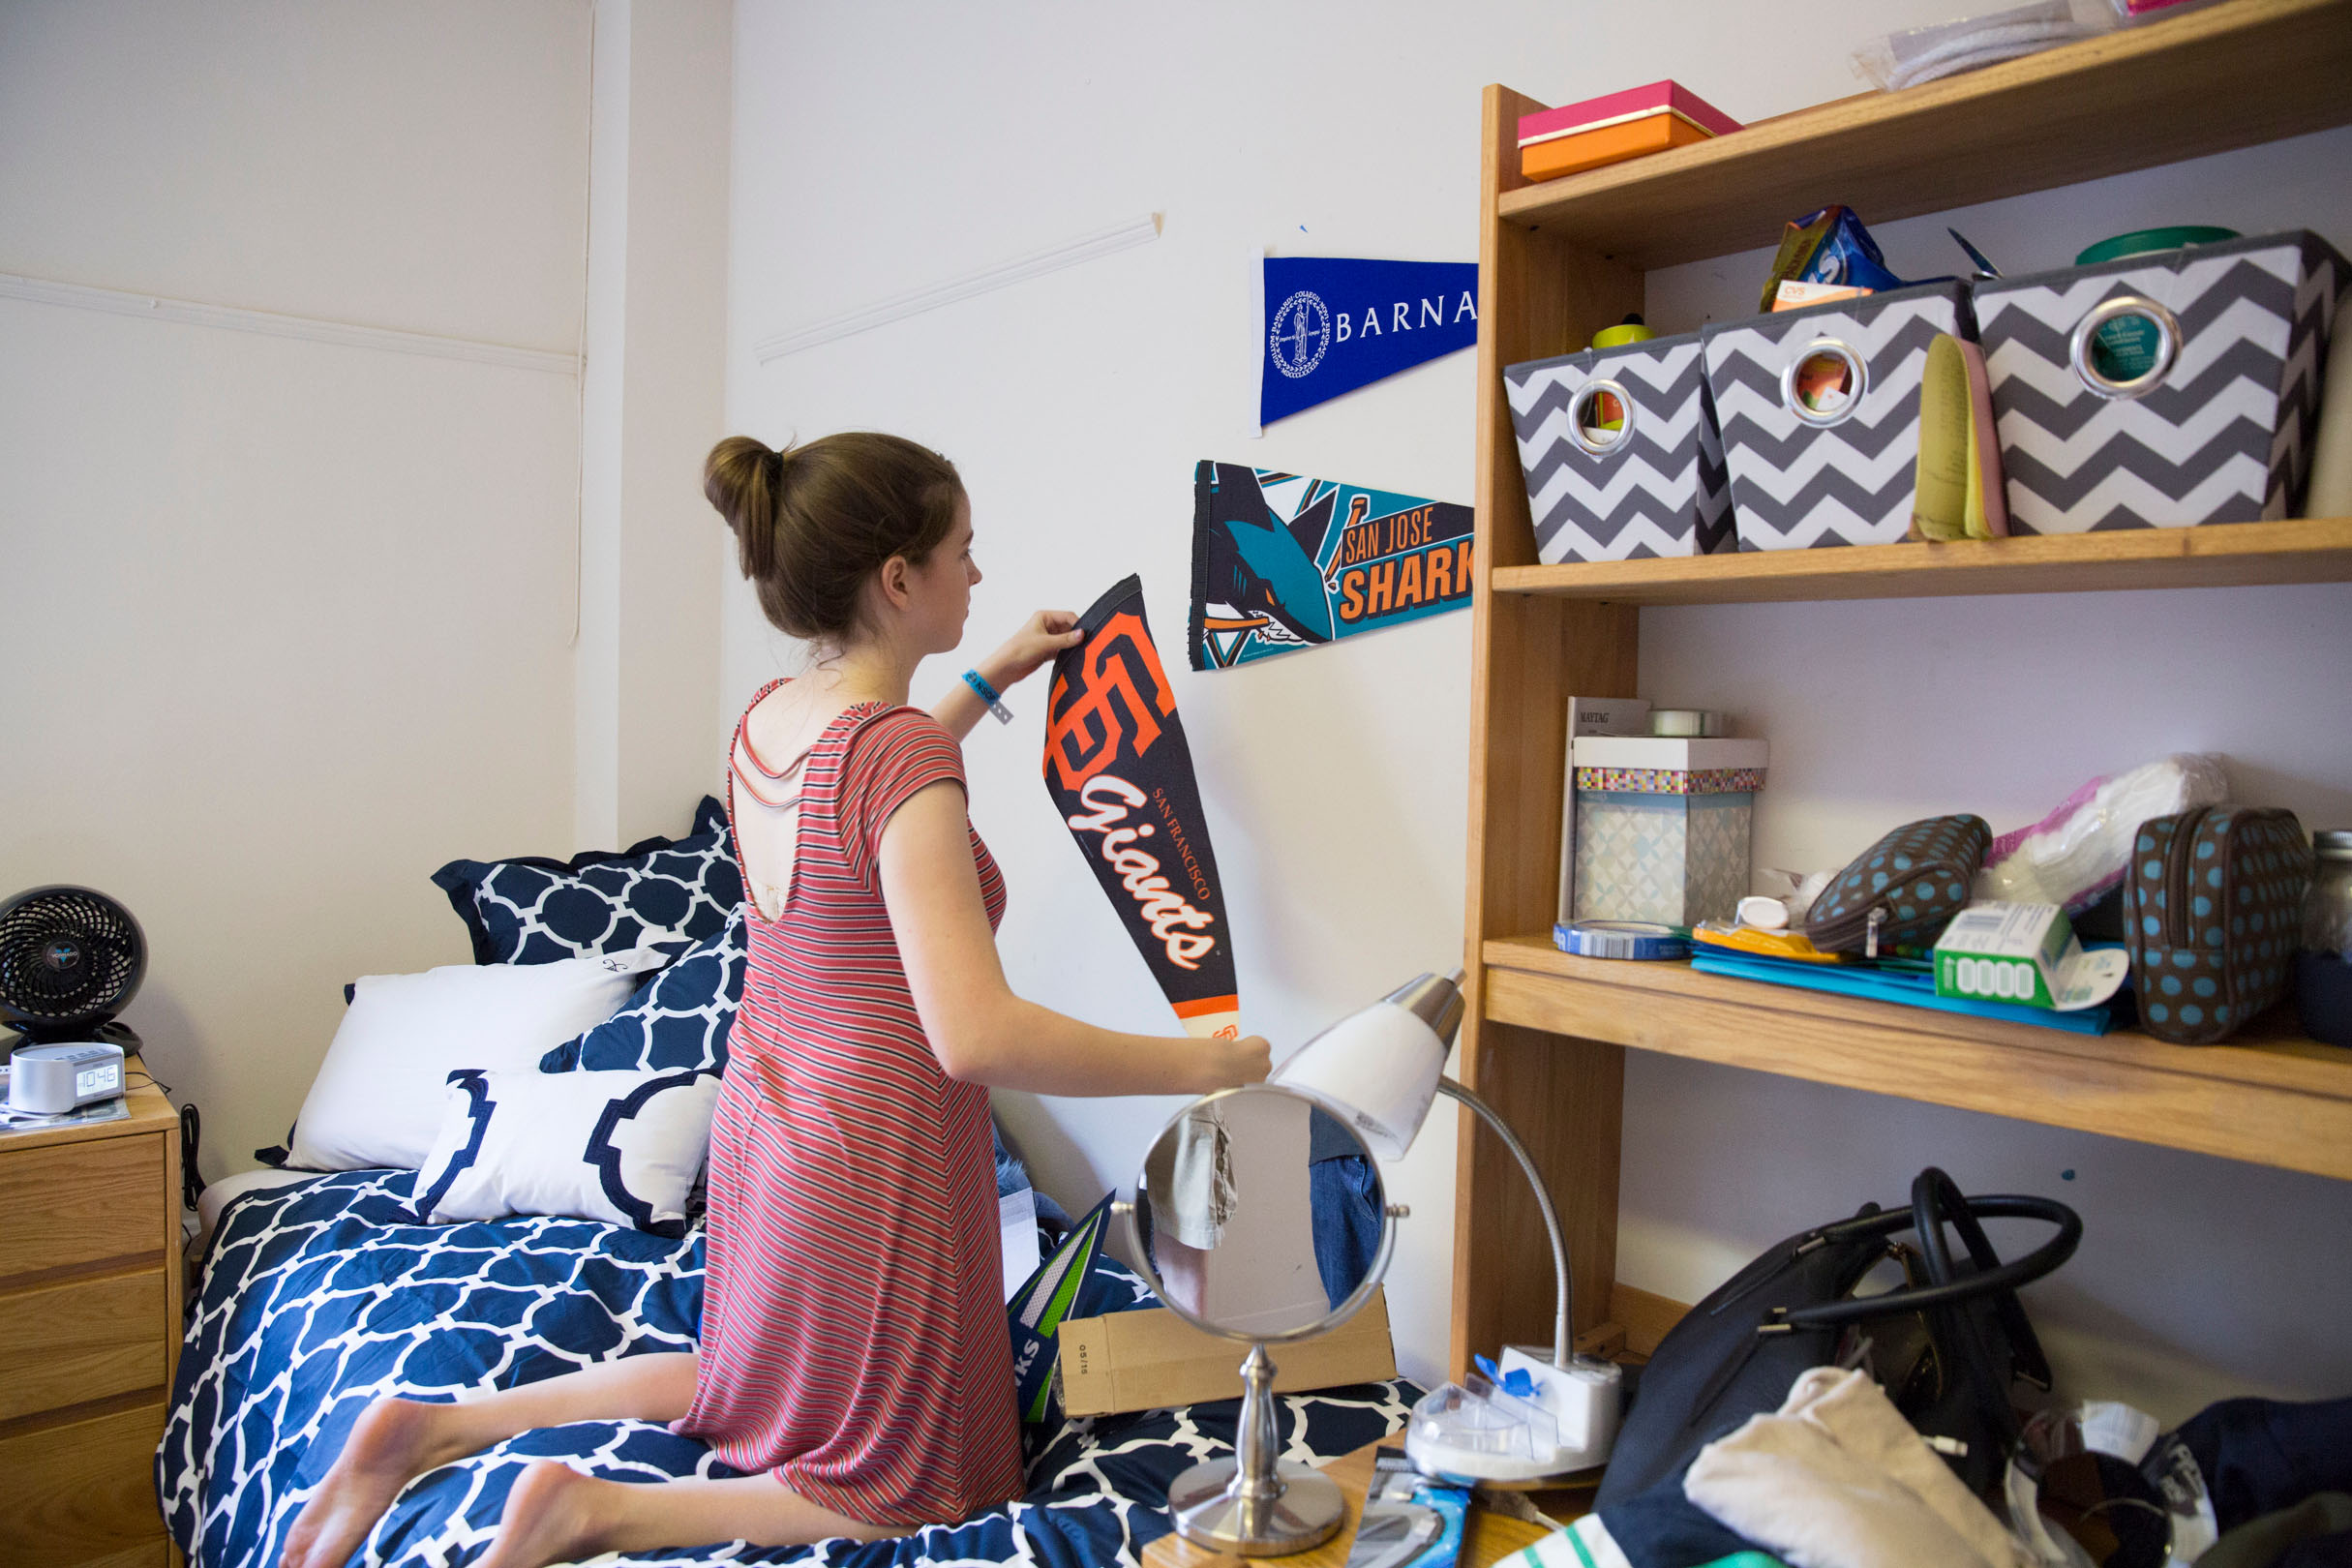 Student decorating dorm room